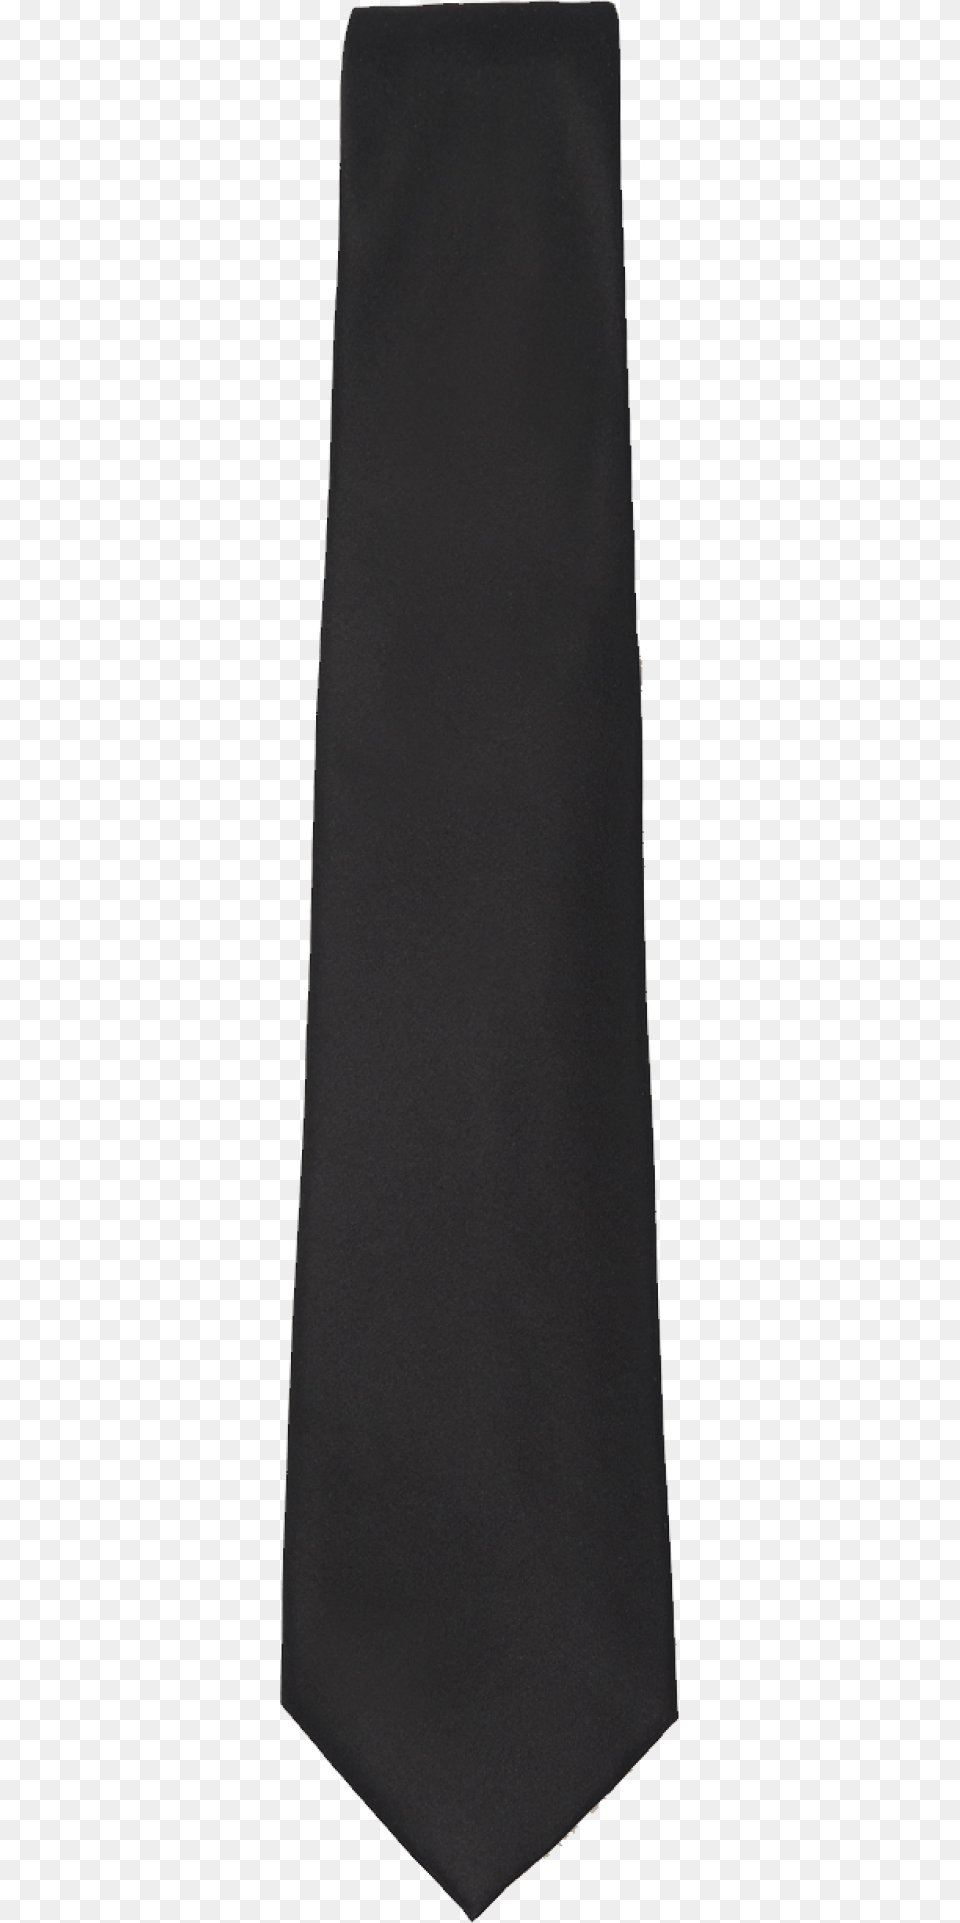 Black Tie Image Leather, Accessories, Formal Wear, Necktie Png